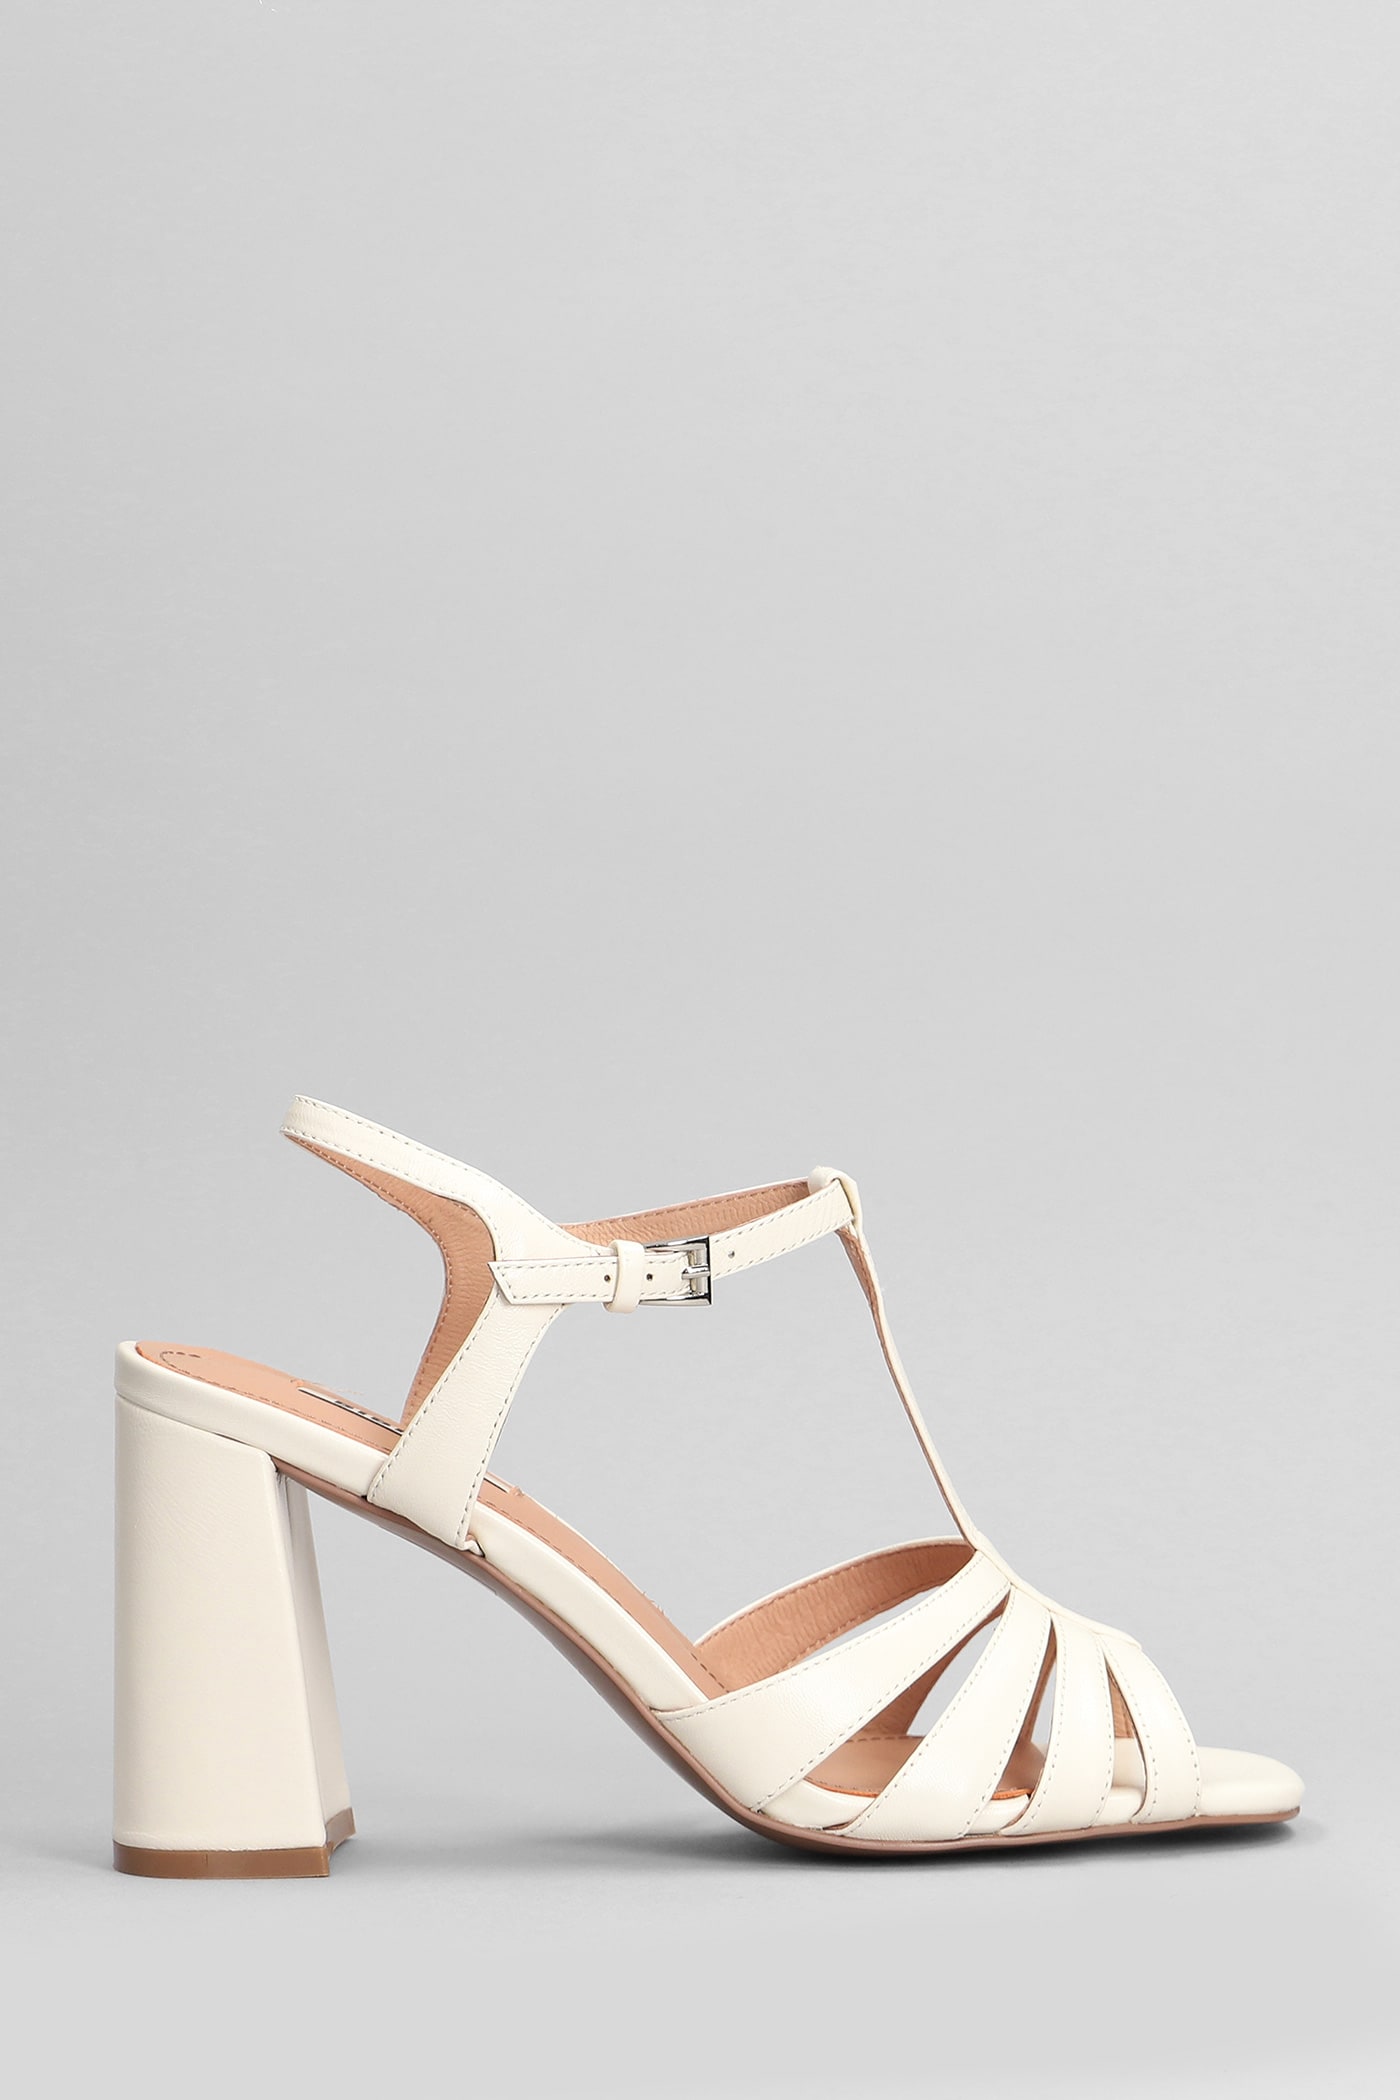 Azalea Sandals In White Leather